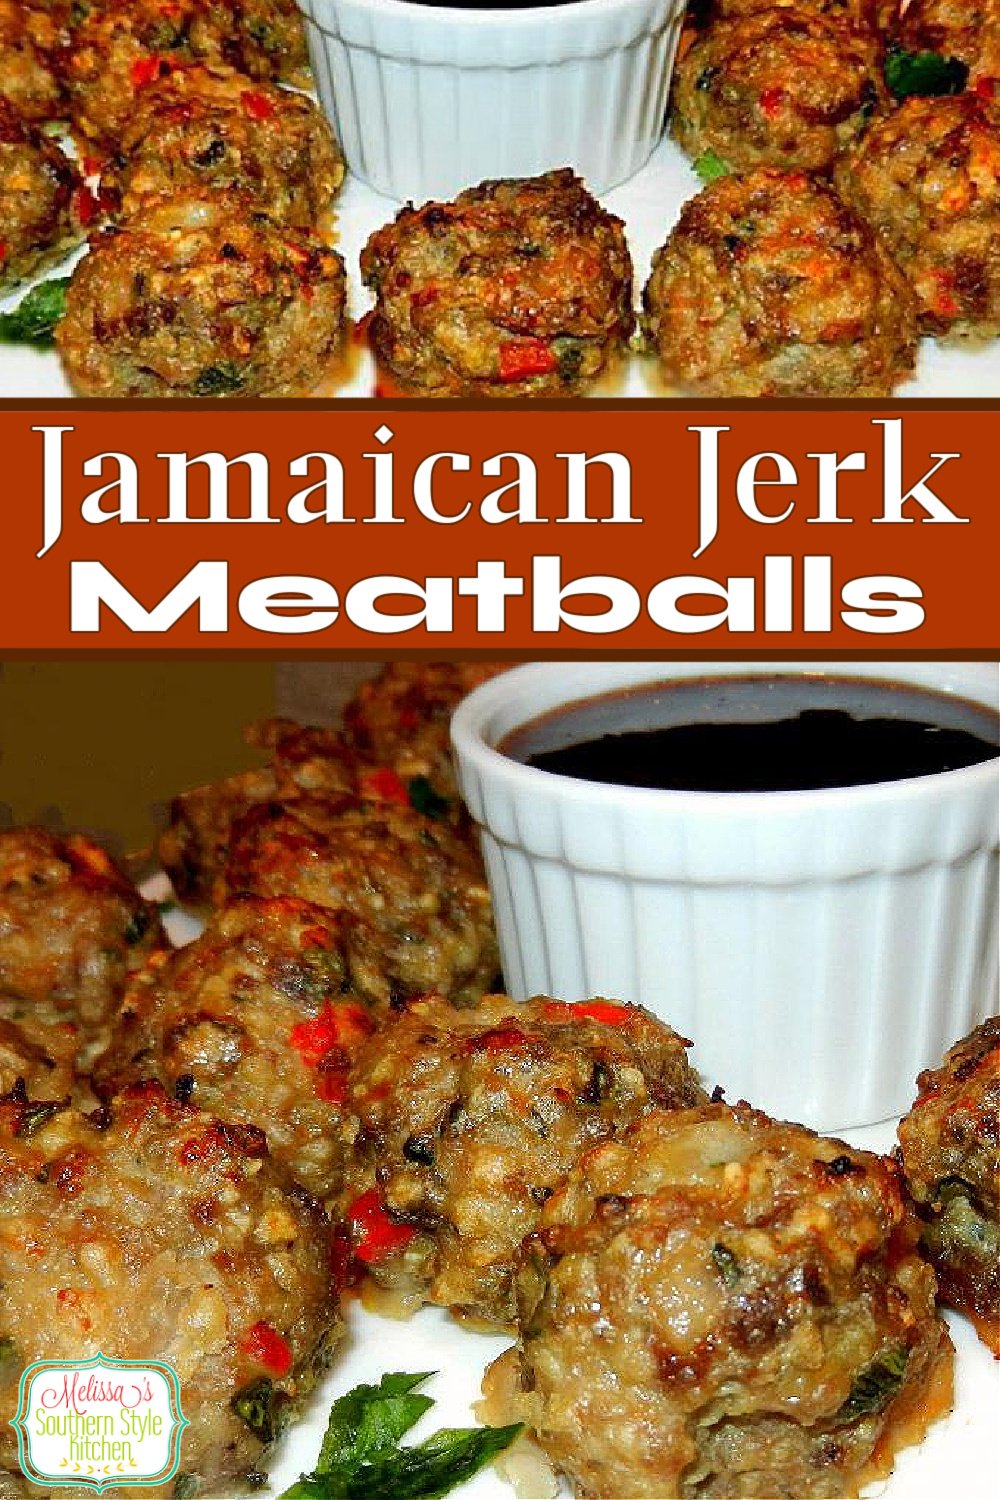 Enjoy these island inspired meatballs as an appetizer or an entree #jerkmeatballs #meatballs #meatballrecipes #jerkseasoning #pork #easygroundbeefrecipes #appetizers #dinner #dinnerideas #southernfood #southernrecipes via @melissasssk